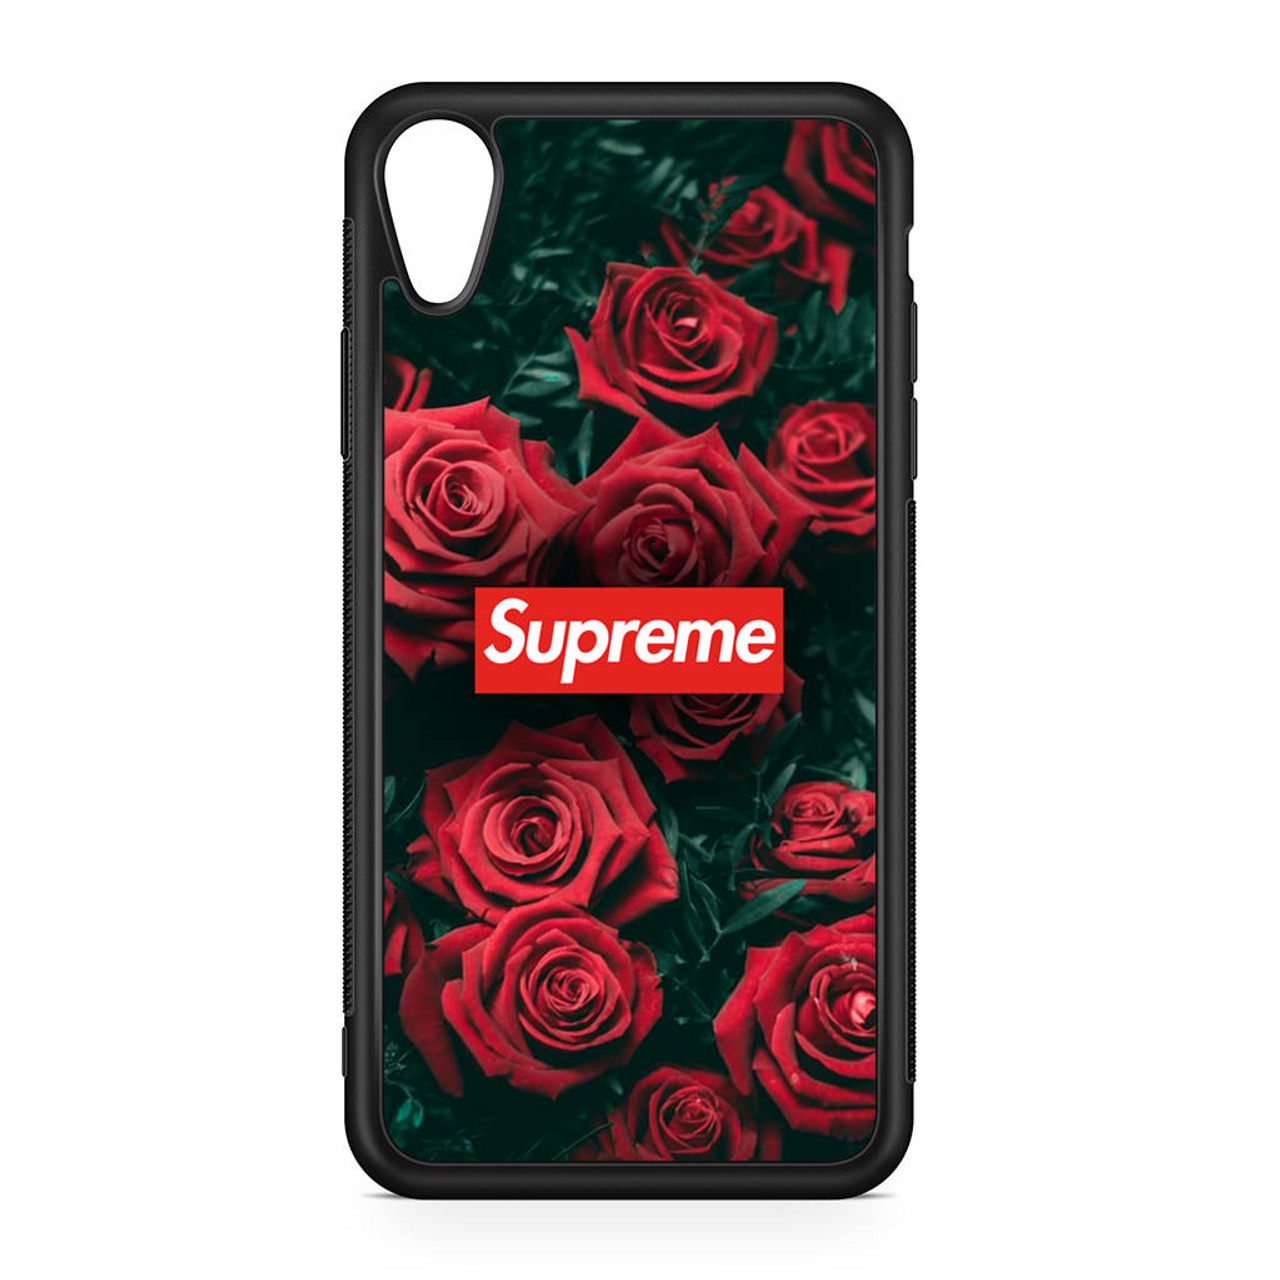 Supreme Roses Iphone Xr Case Ggians